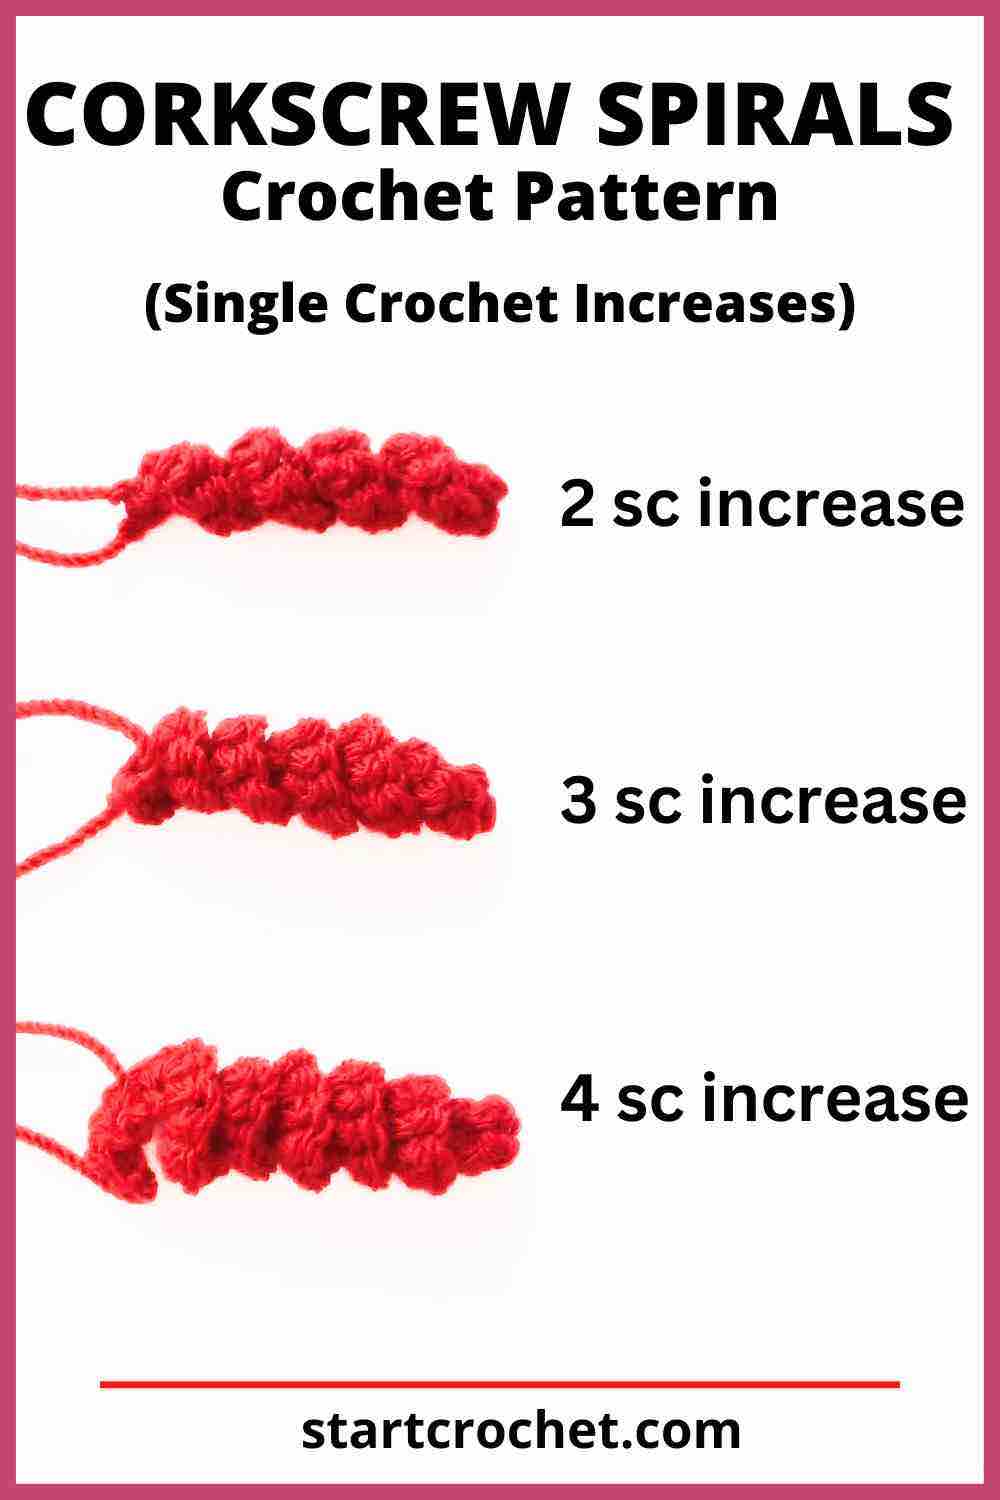 Corkscrew-Spiral-crochet-Pattern-sc-increase